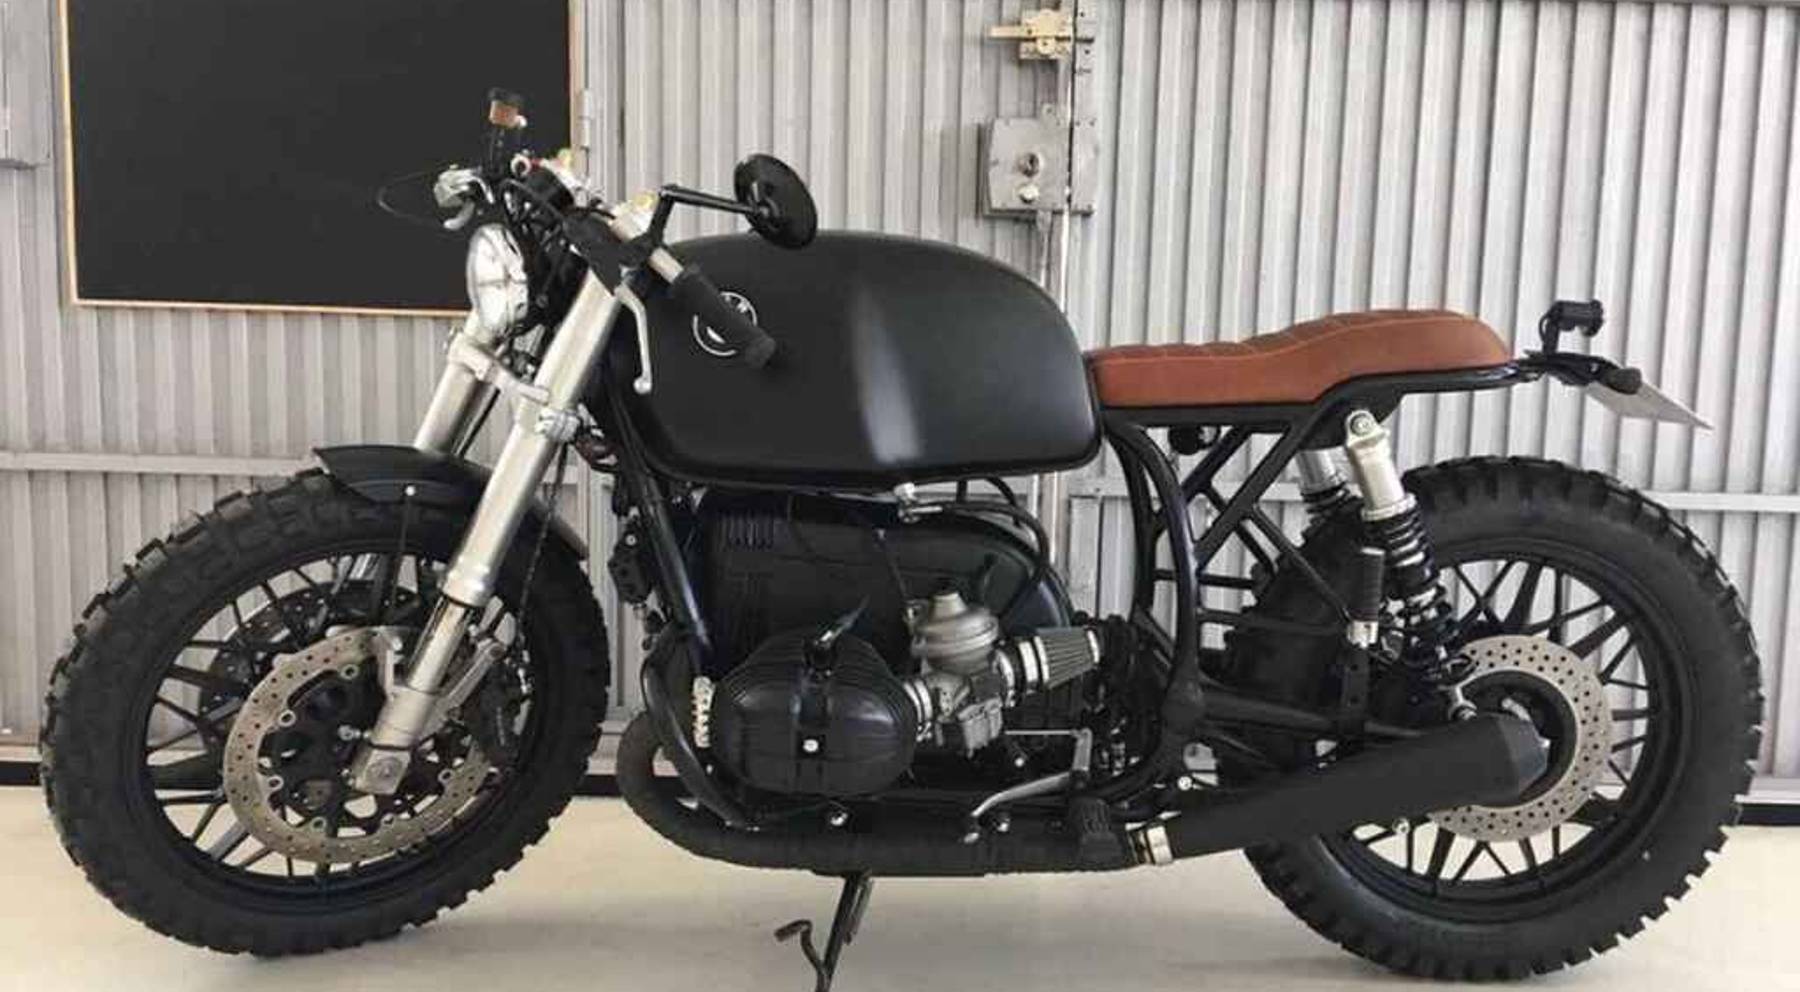 Zlatan Ibrahimovic shows off his new Harley-Davidson on Instagram